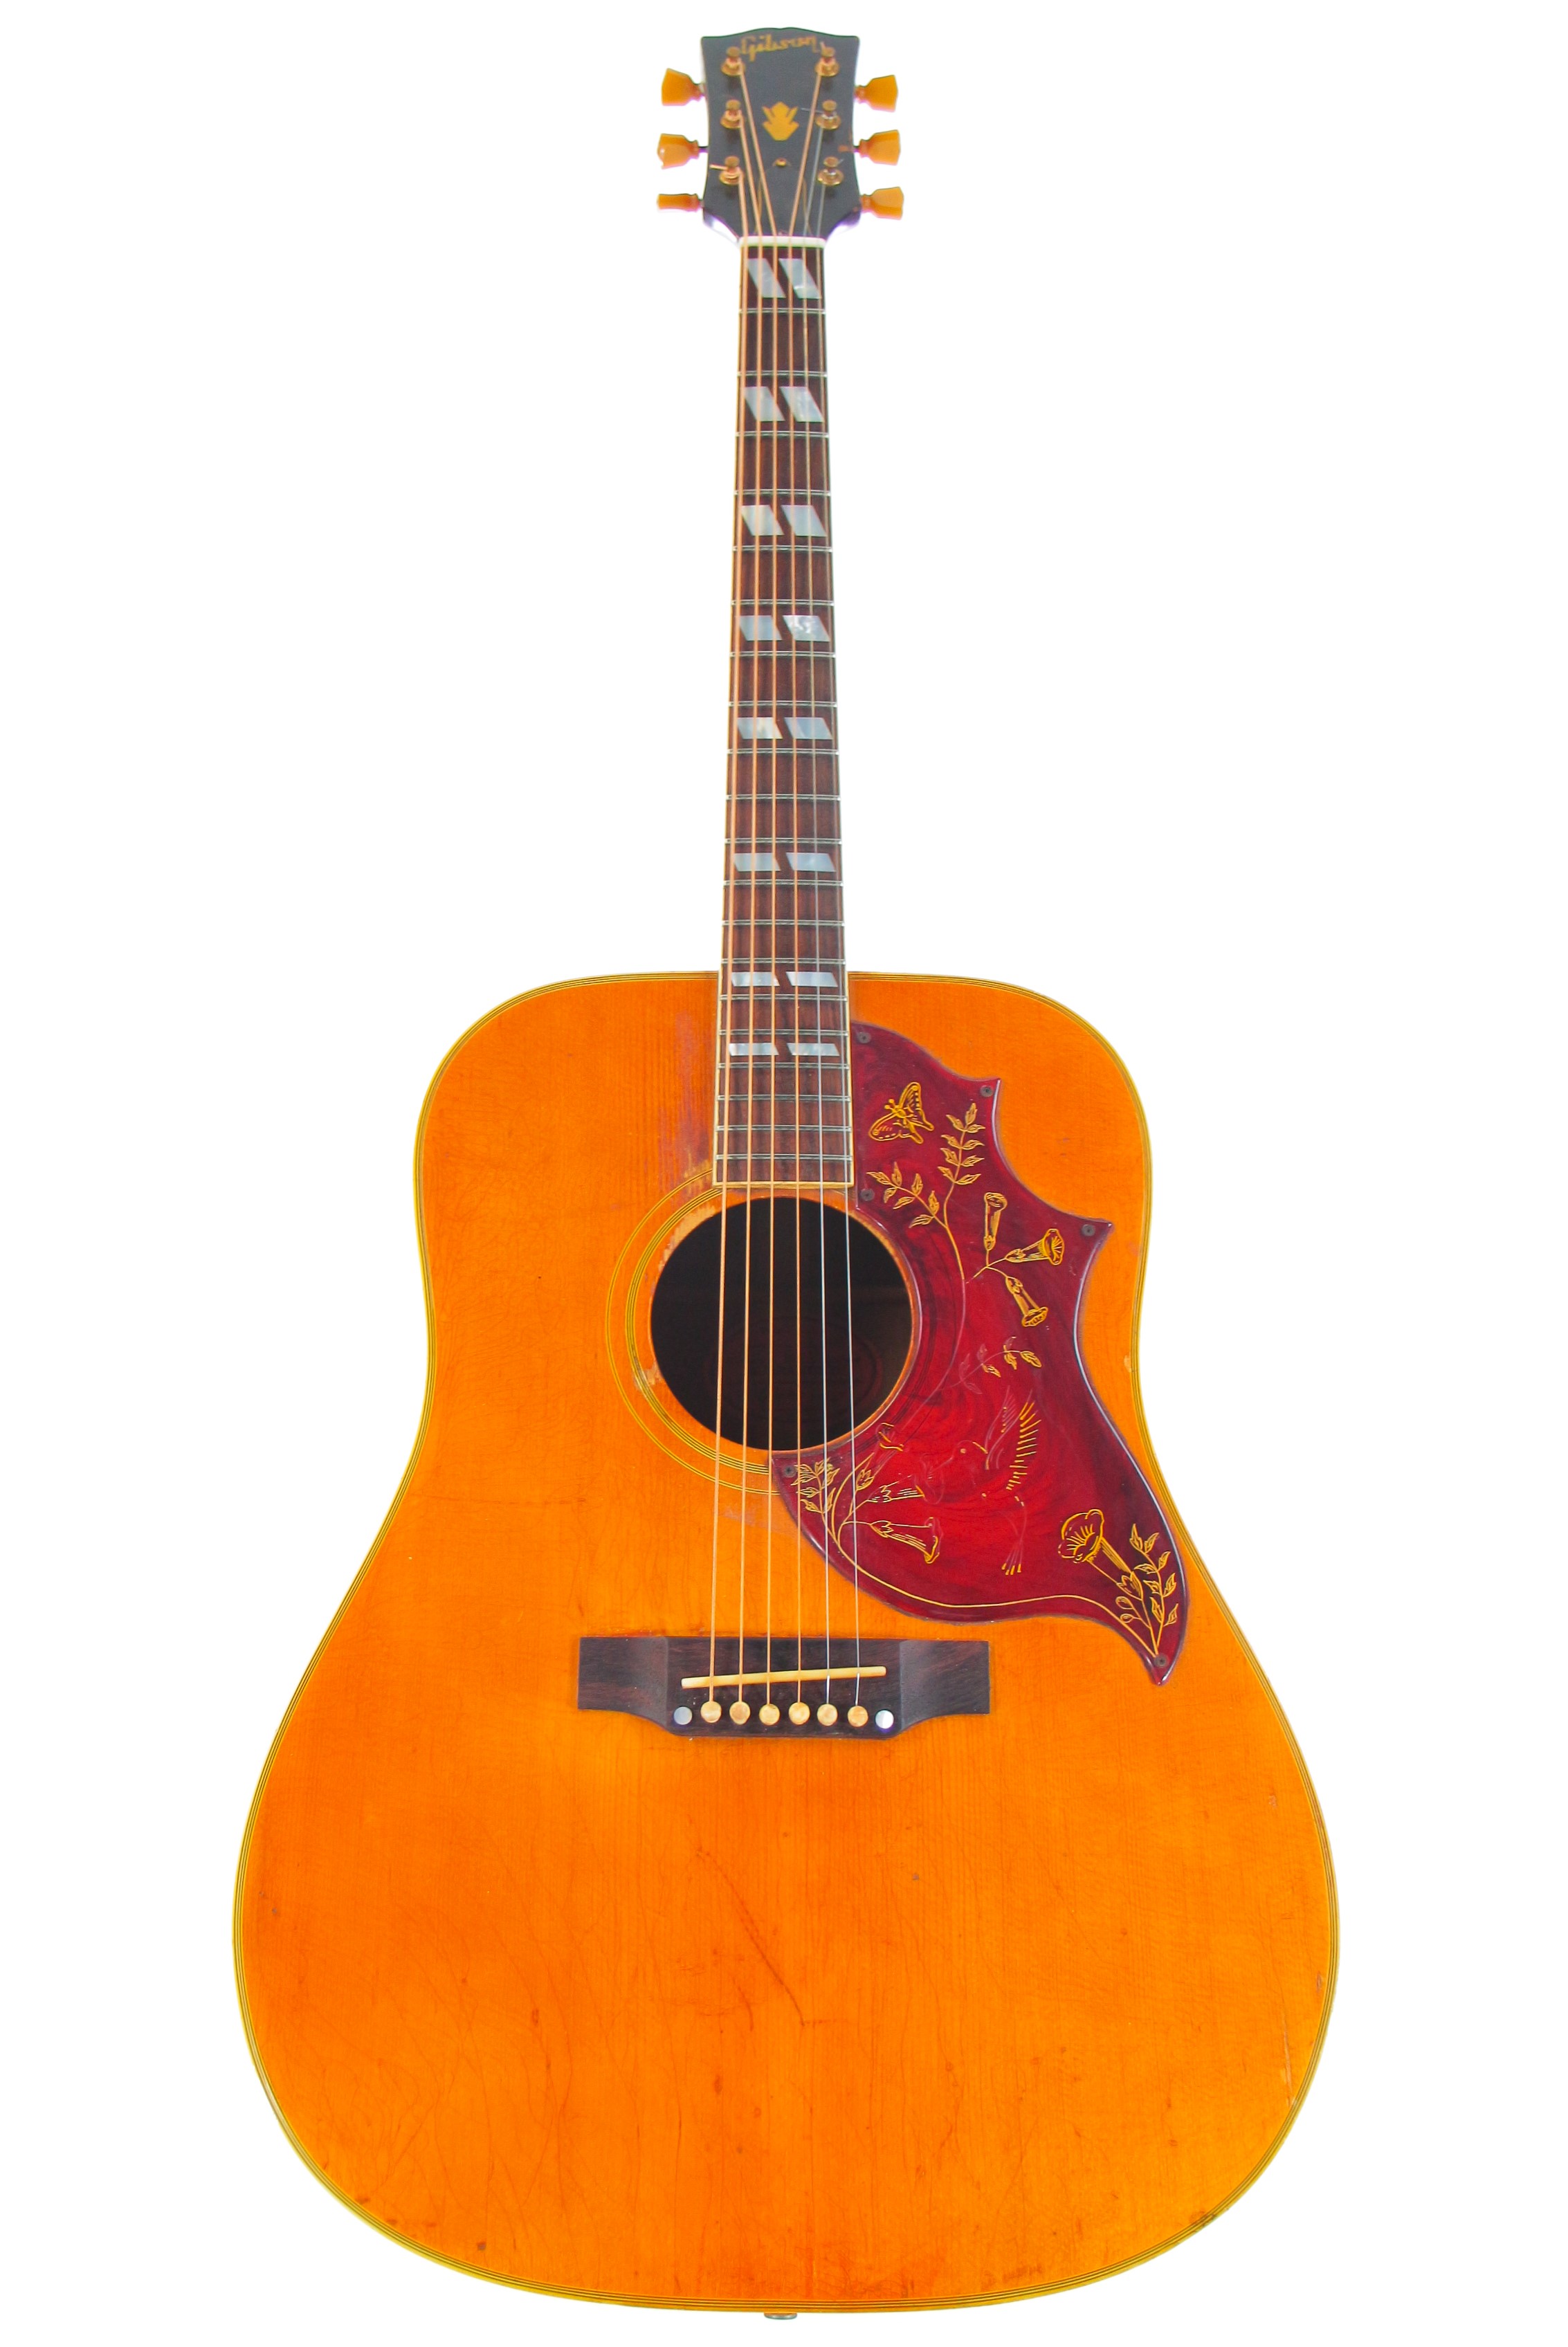 Gibson Hummingbird 1968 Natural Guitar For Sale Vintage Guitar World